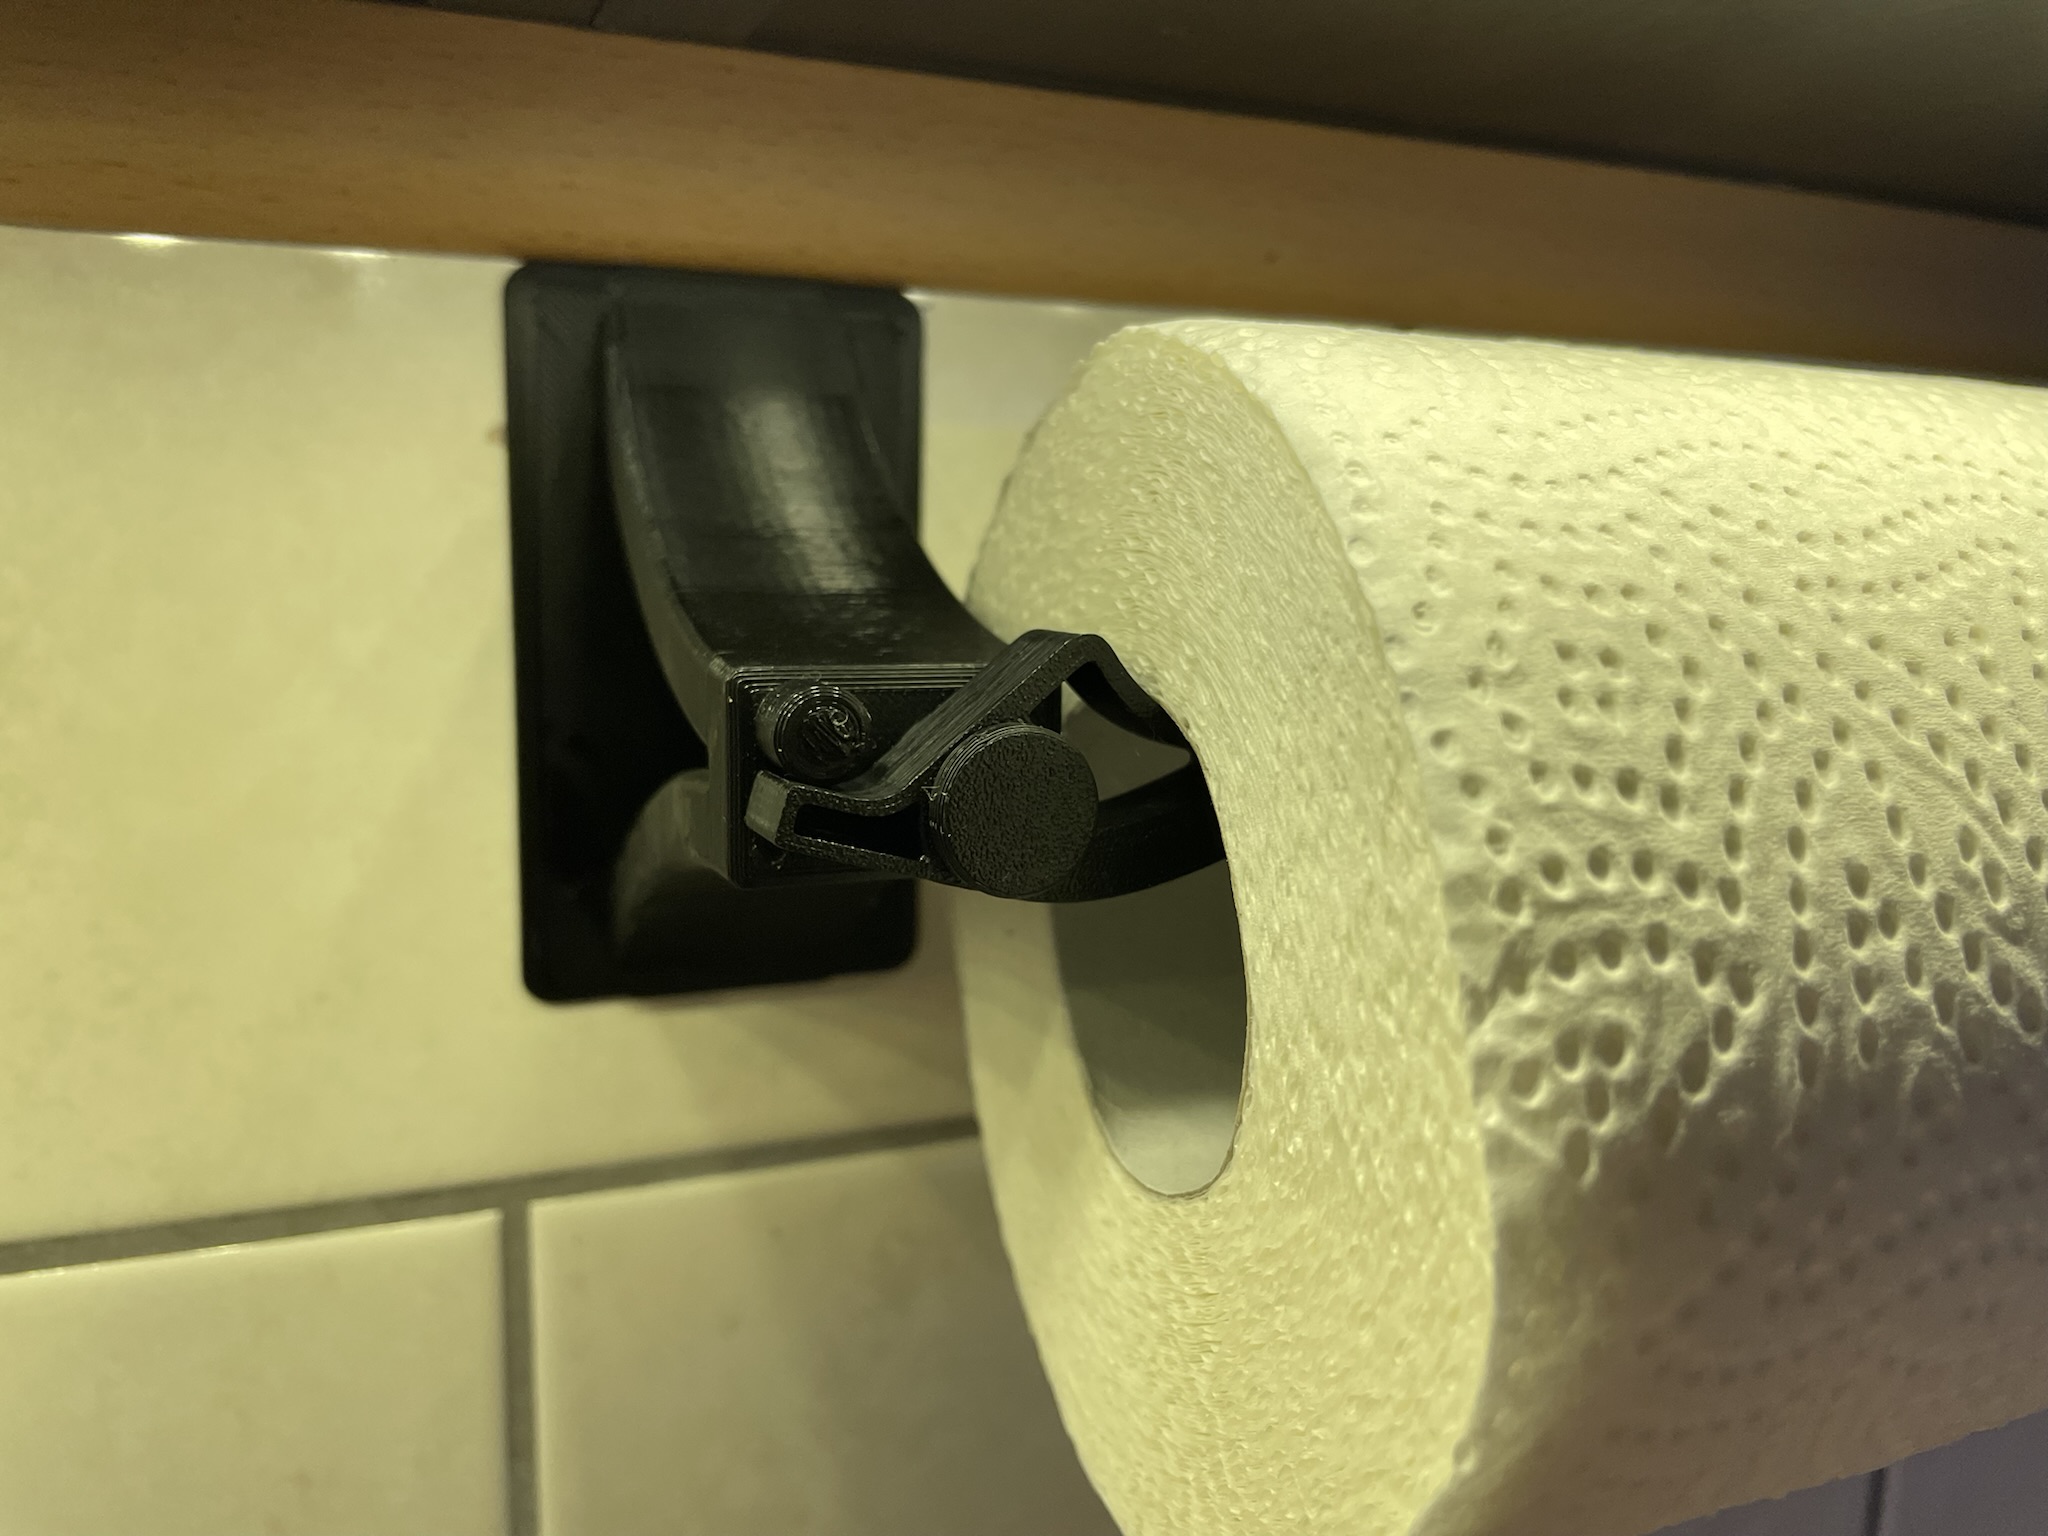 Quick reload holder for toilet paper/paper towel remix